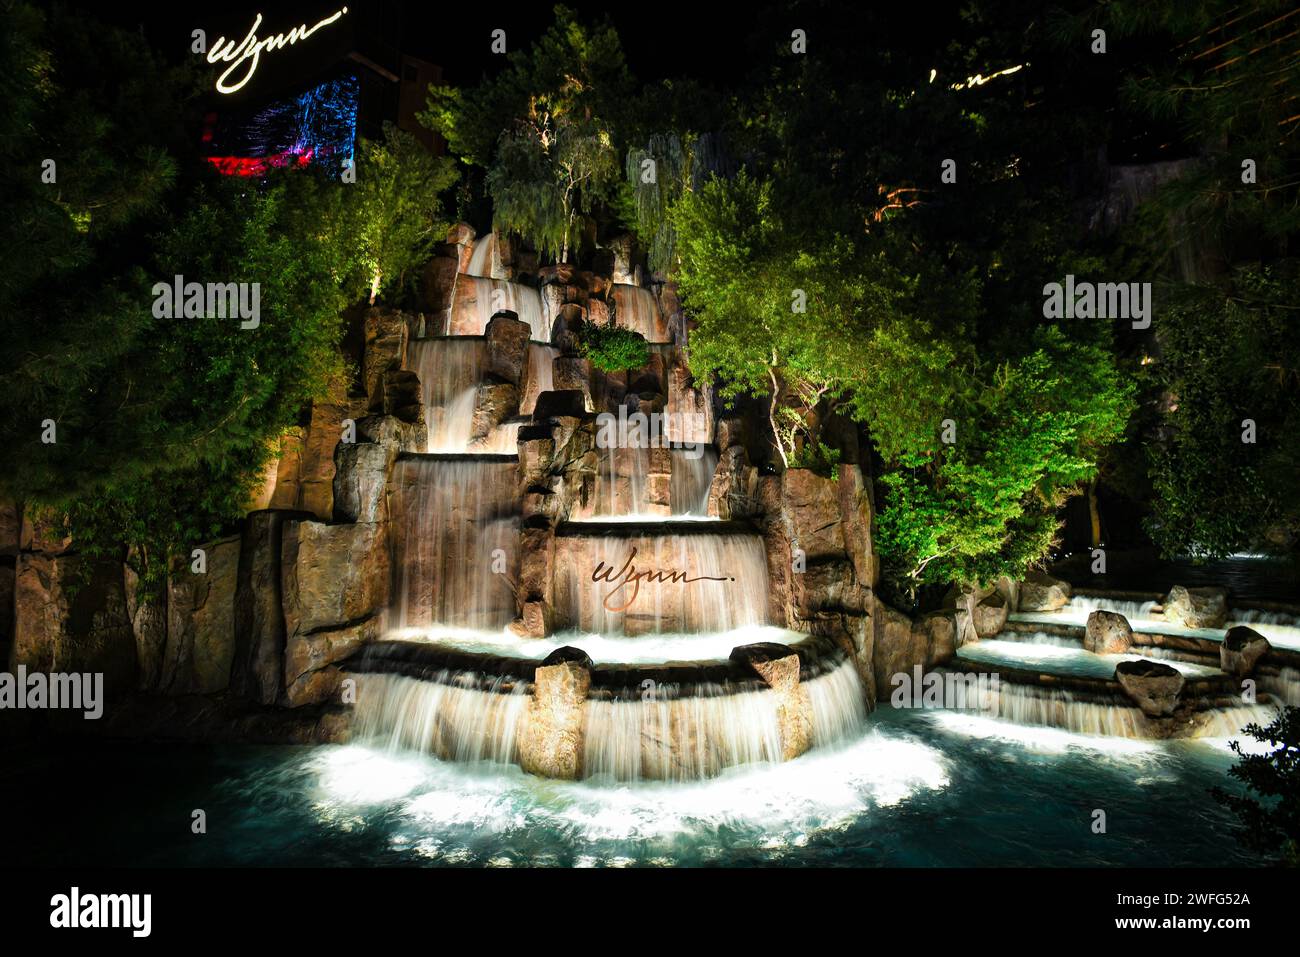 The Waterfall of Wynn Las Vegas Mountain at Night Stock Photo